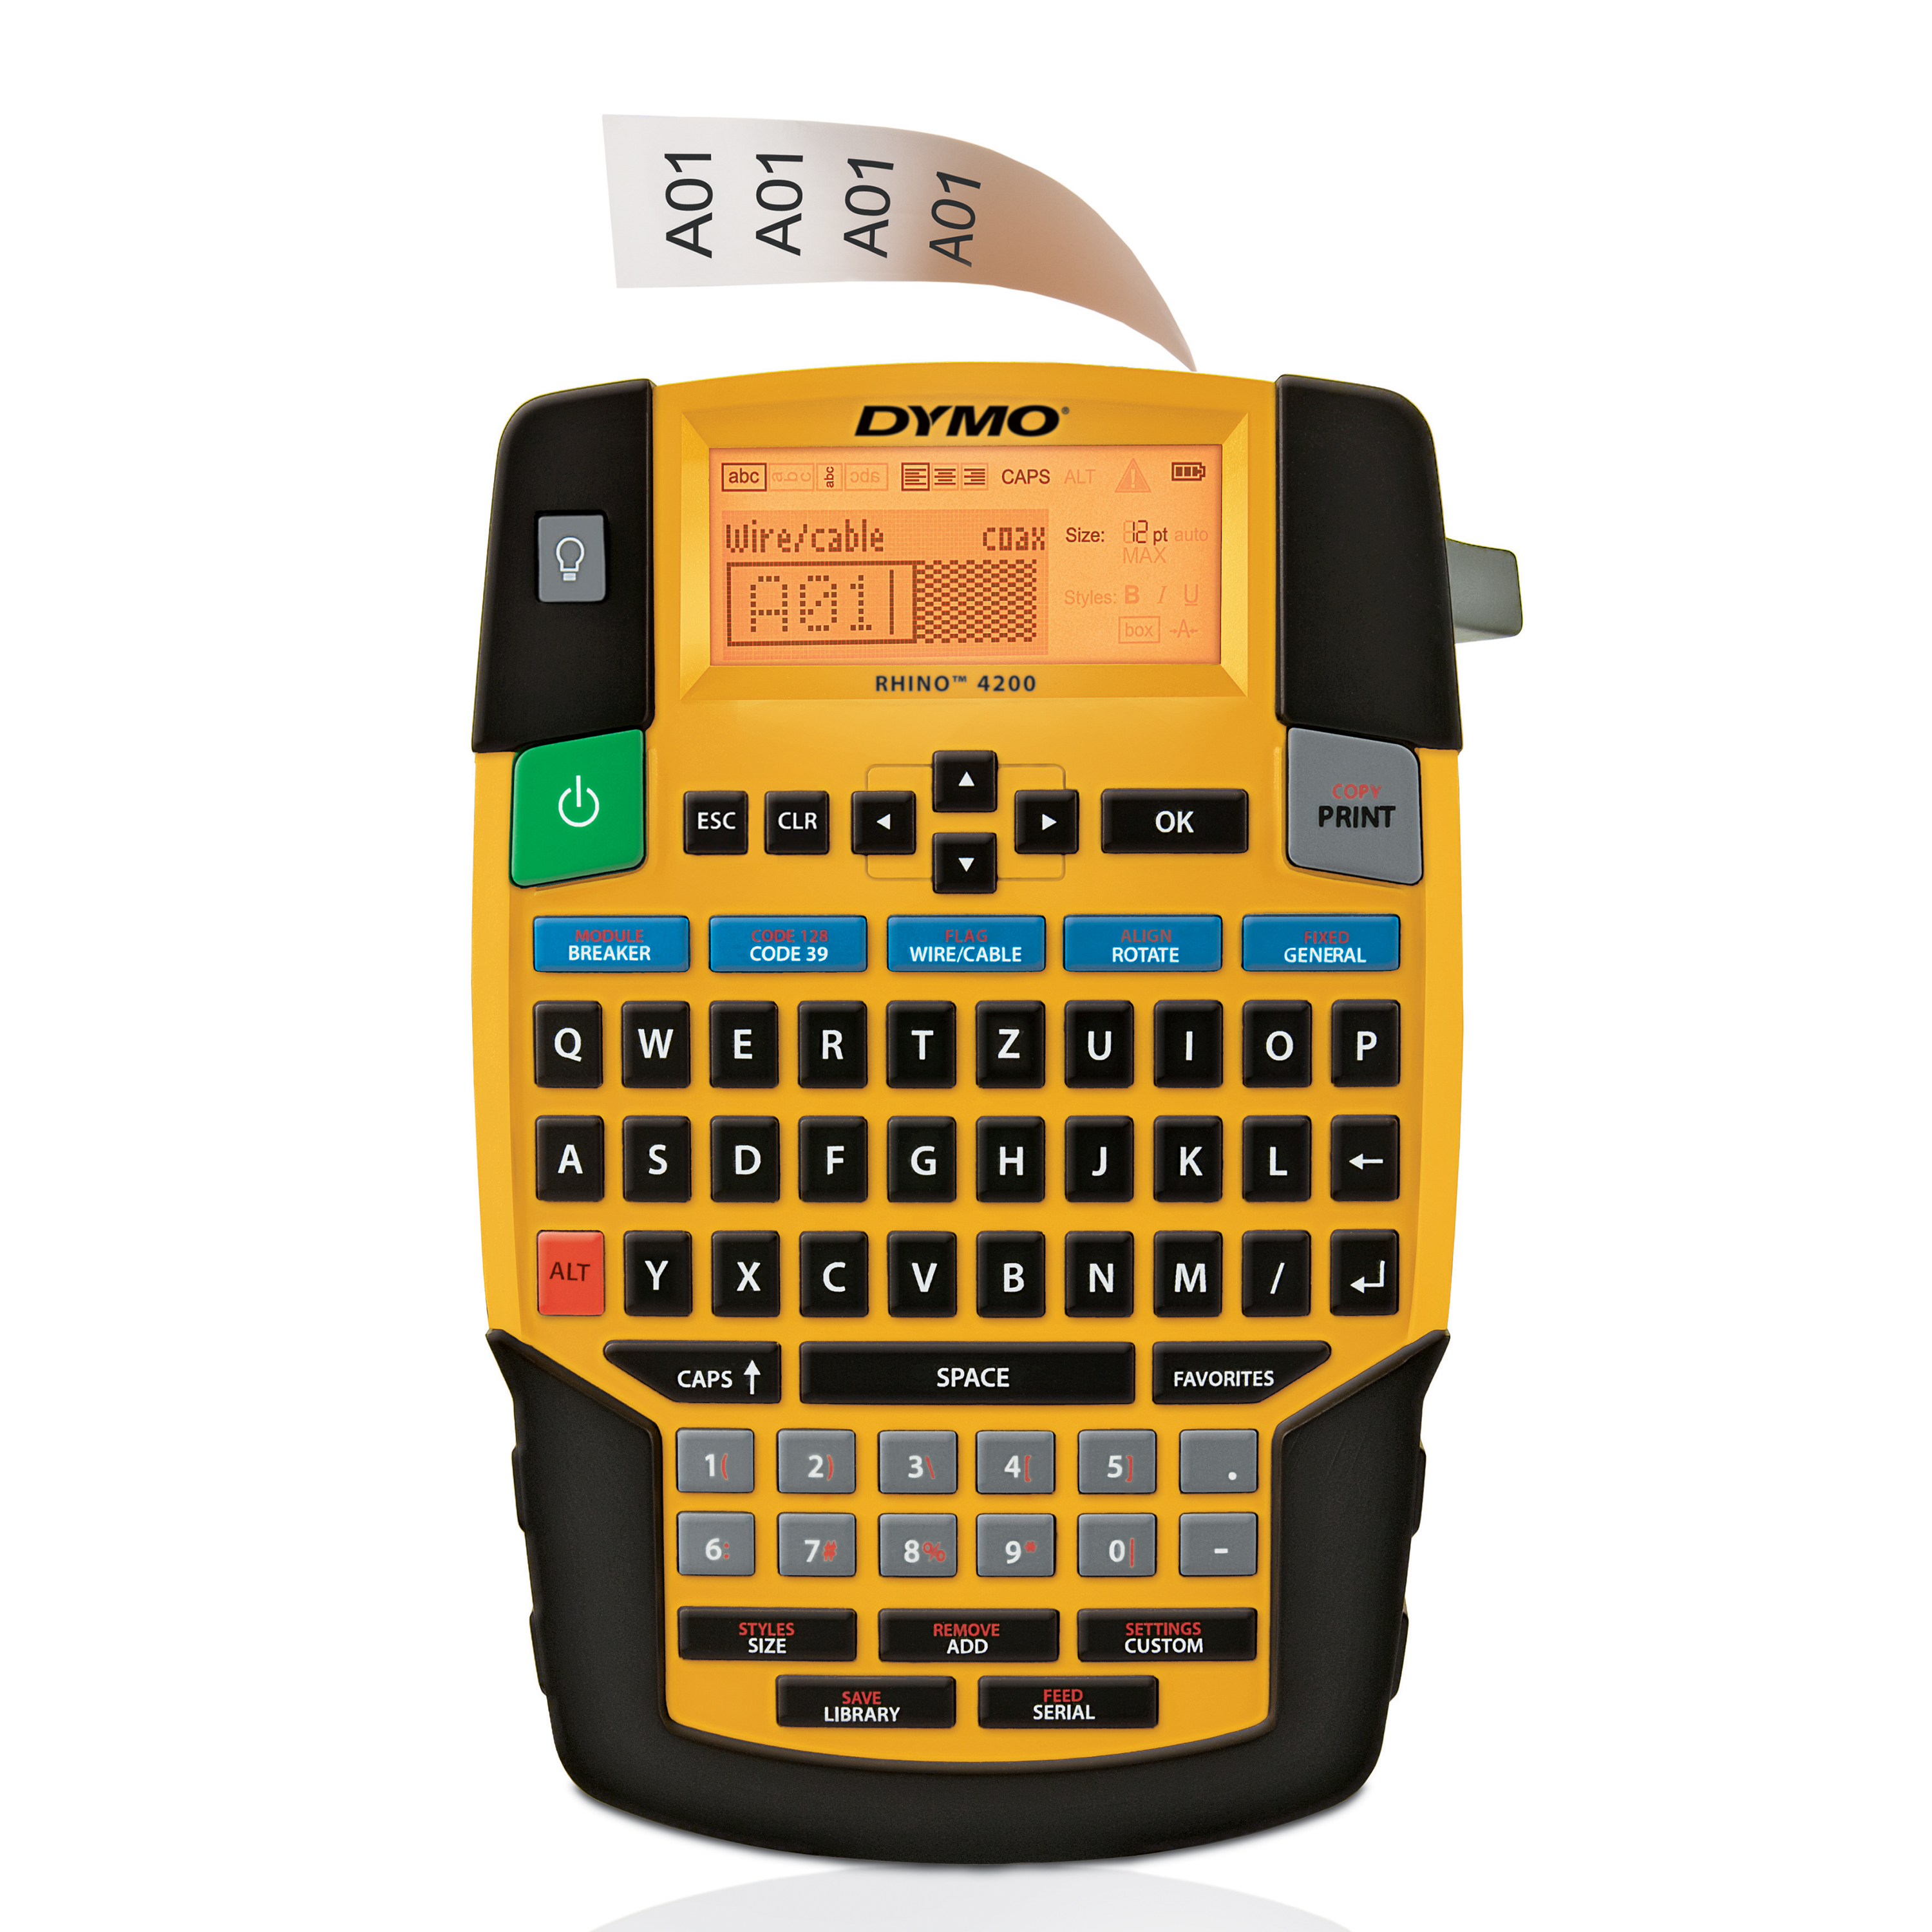 DYMO | Rhino 4200 - Industrielles Beschriftungsgerät mit QWERTZ-Tastatur